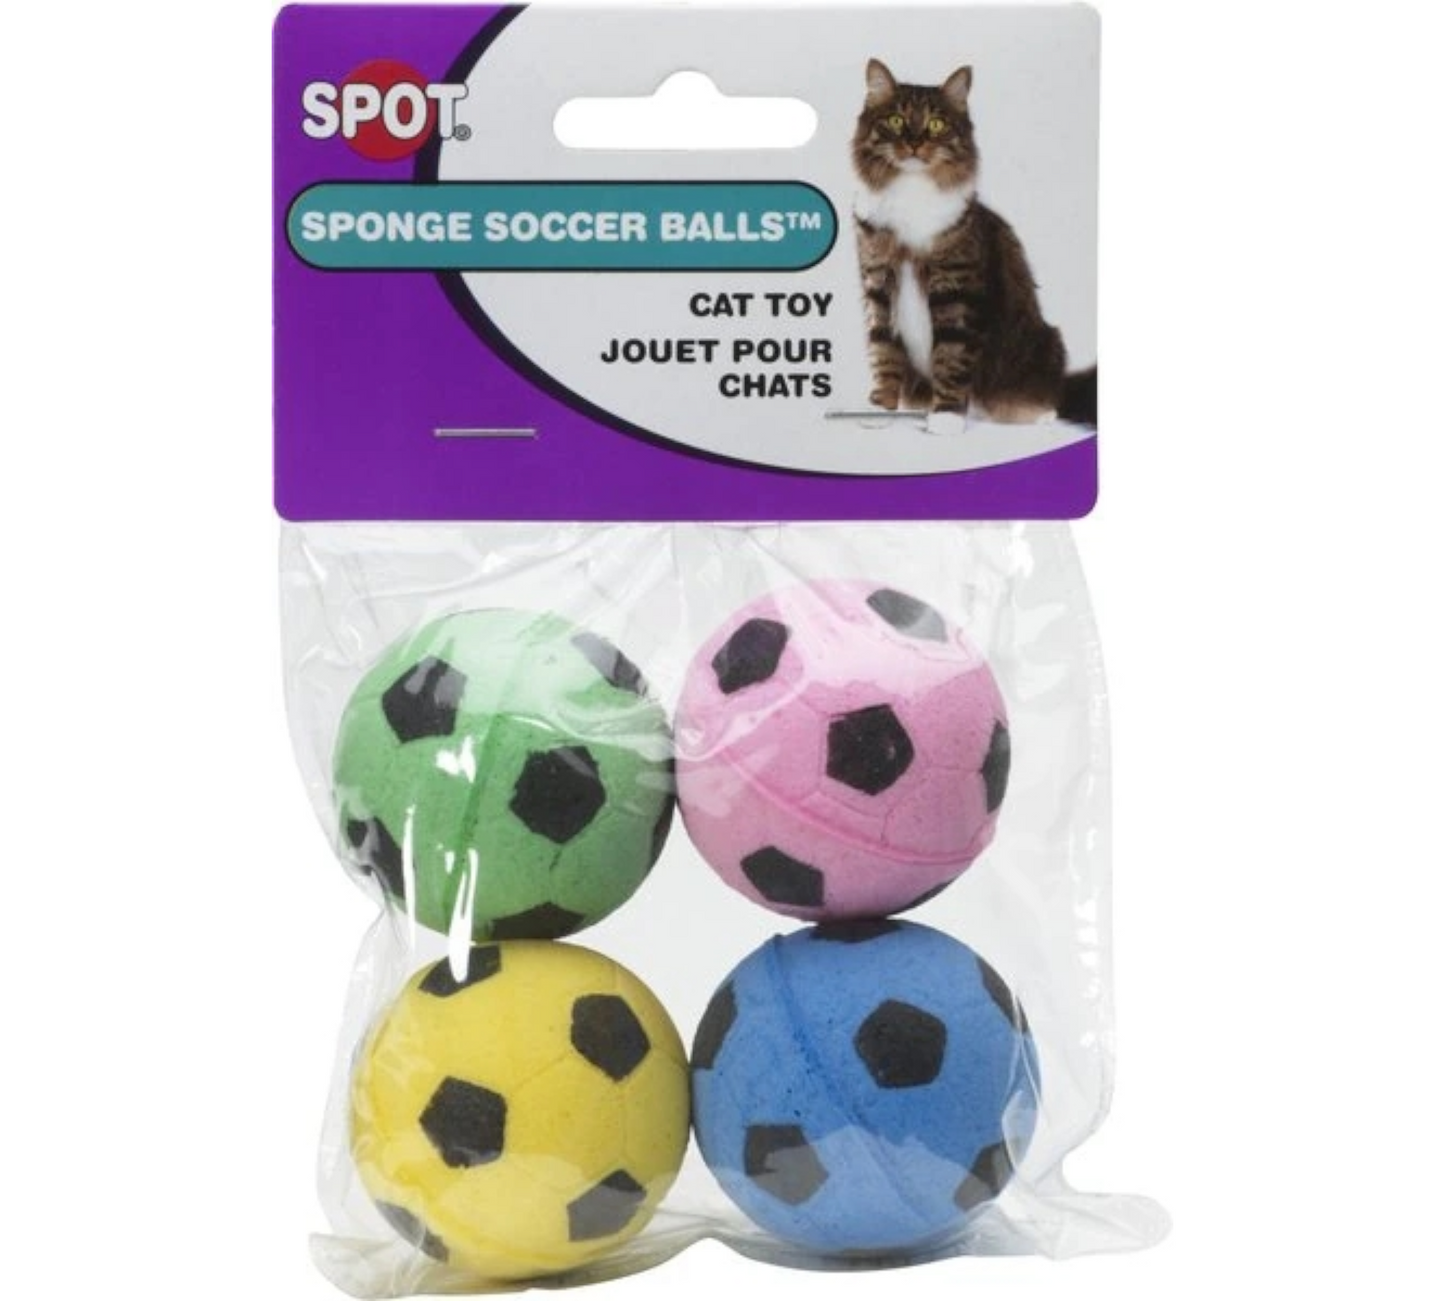 Canine's World Cat Toys Spot Pet Sponge Soccer Ball Cat Toy, 4-pack Spot